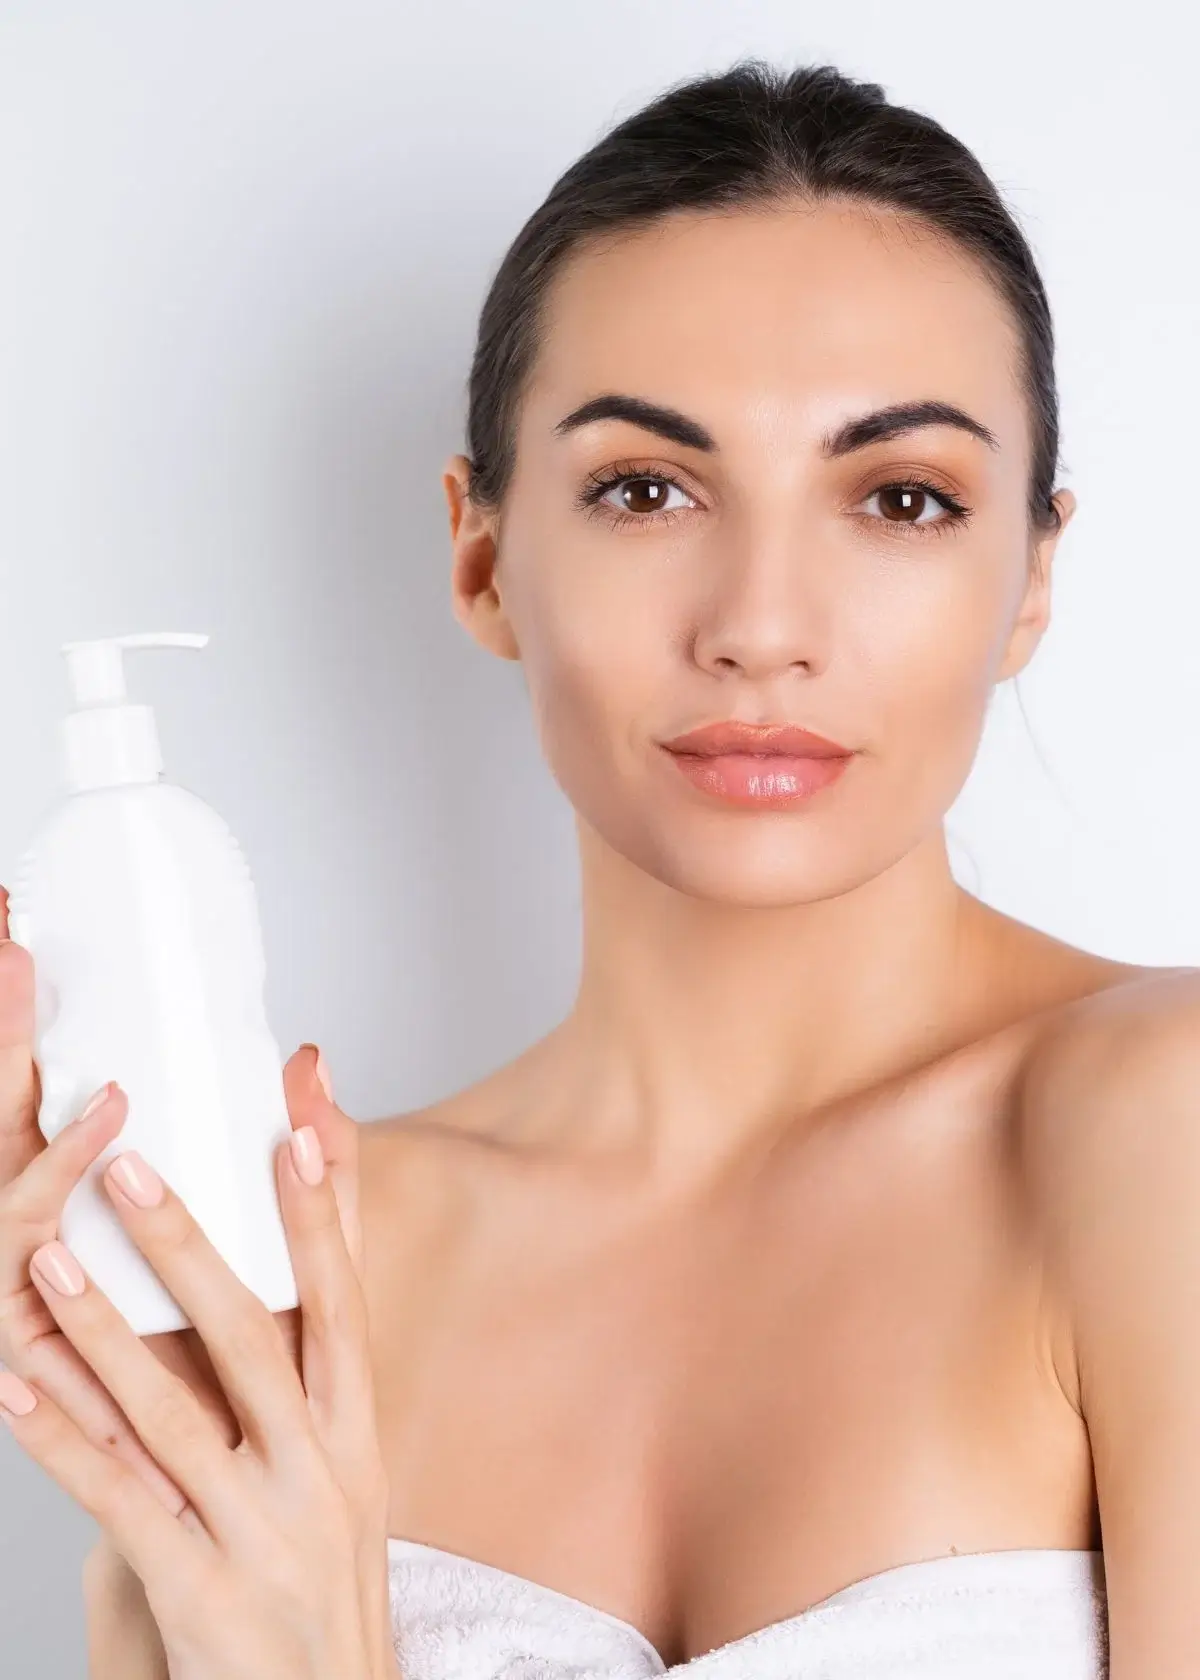 How does sulfate-free shampoo work?